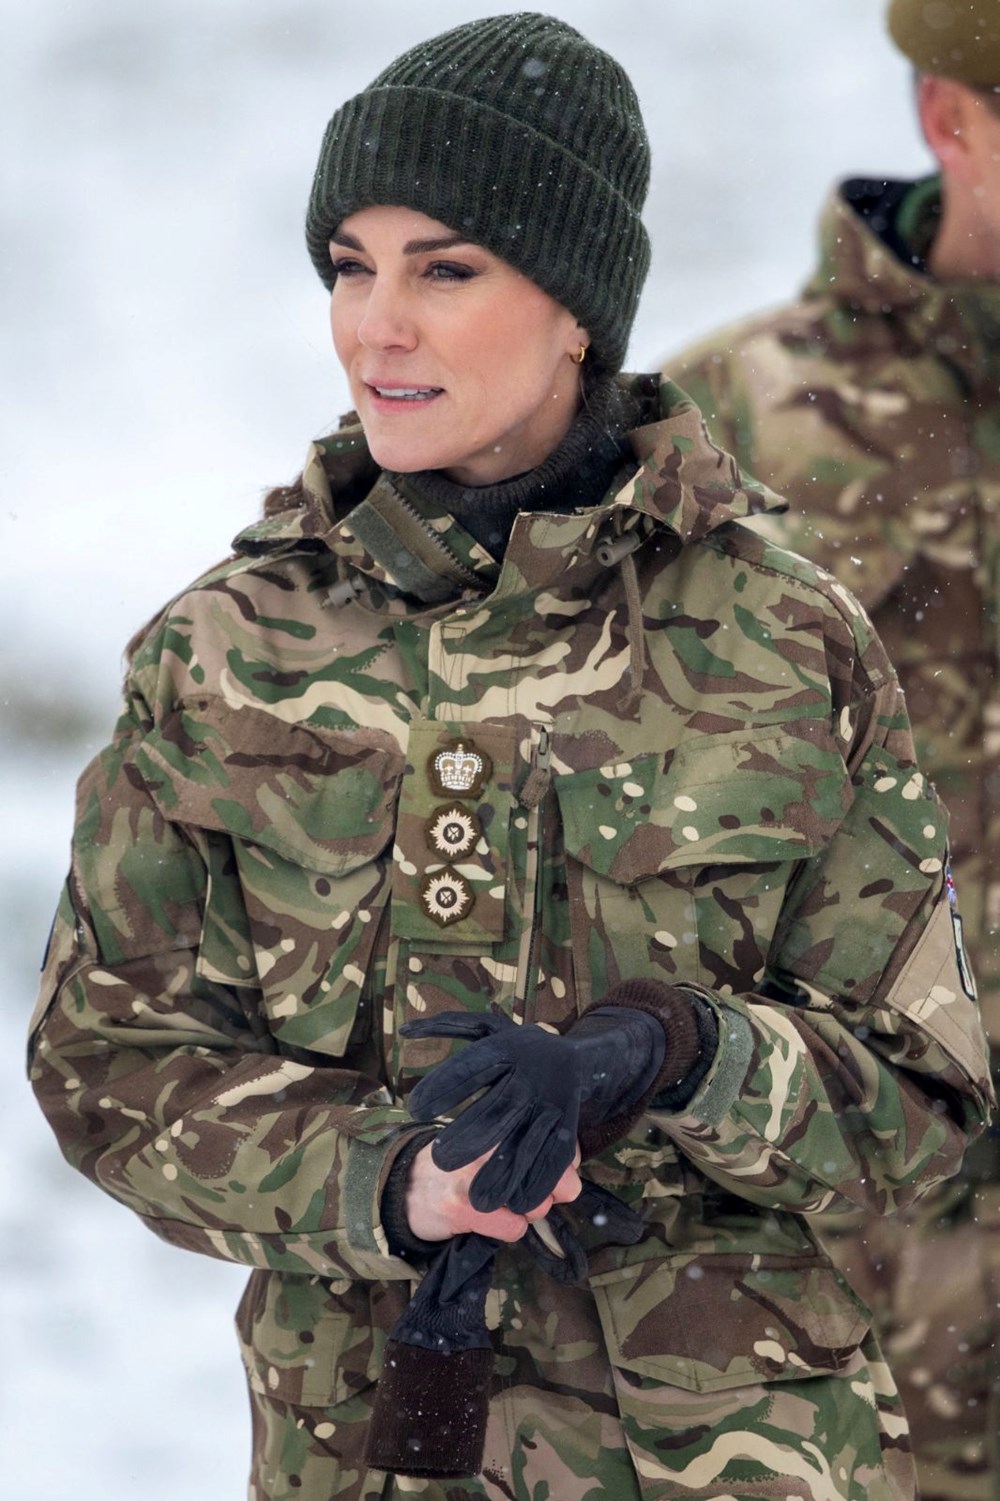 Prenses Kate Middleton askeri üniforma giydi - 5